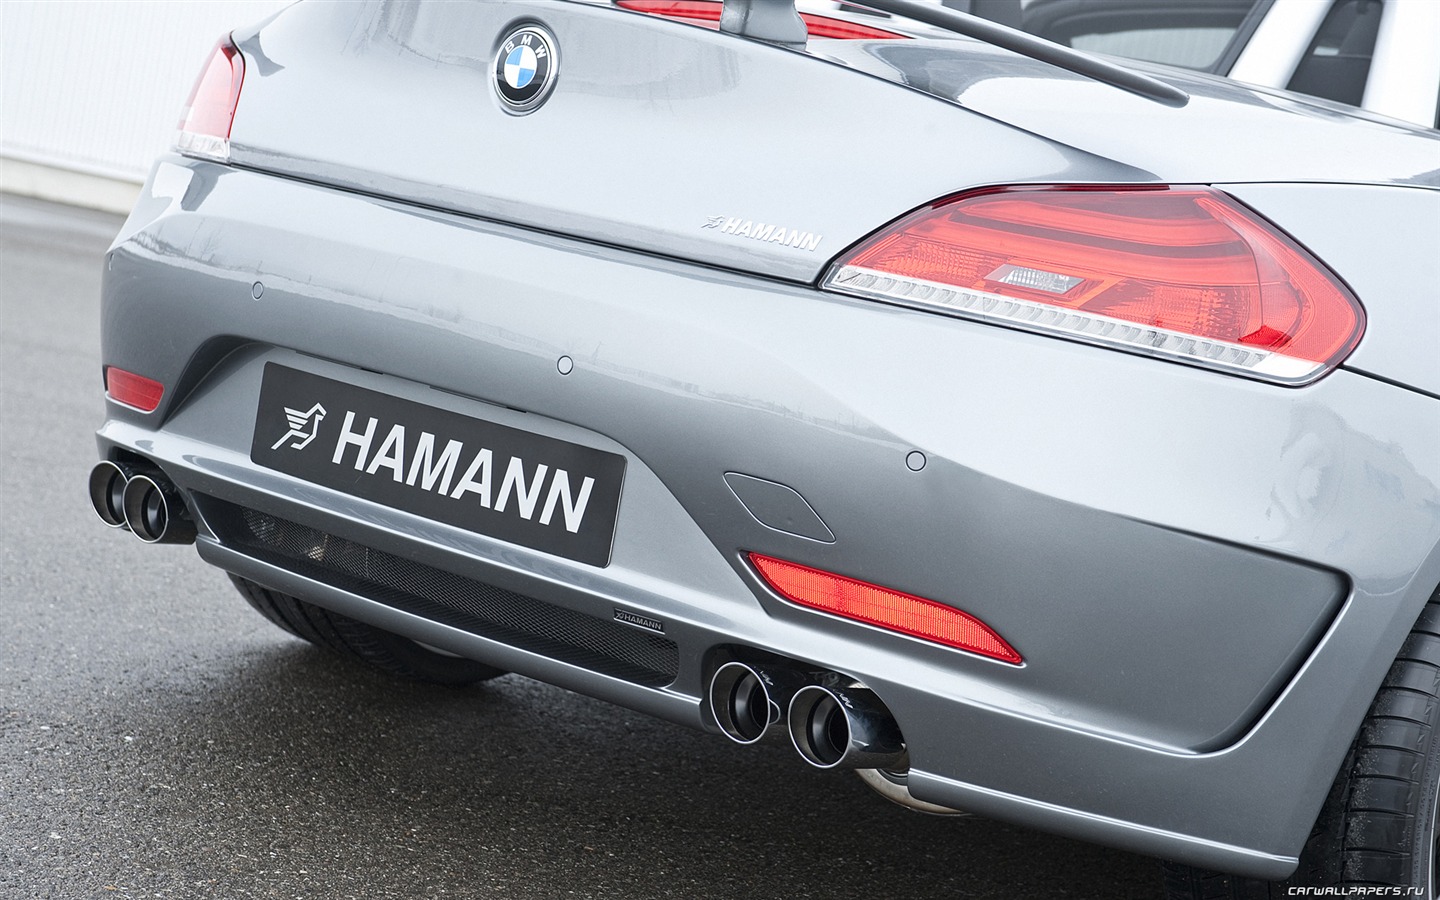 Hamann BMW Z4 E89 - 2010 寶馬 #20 - 1440x900